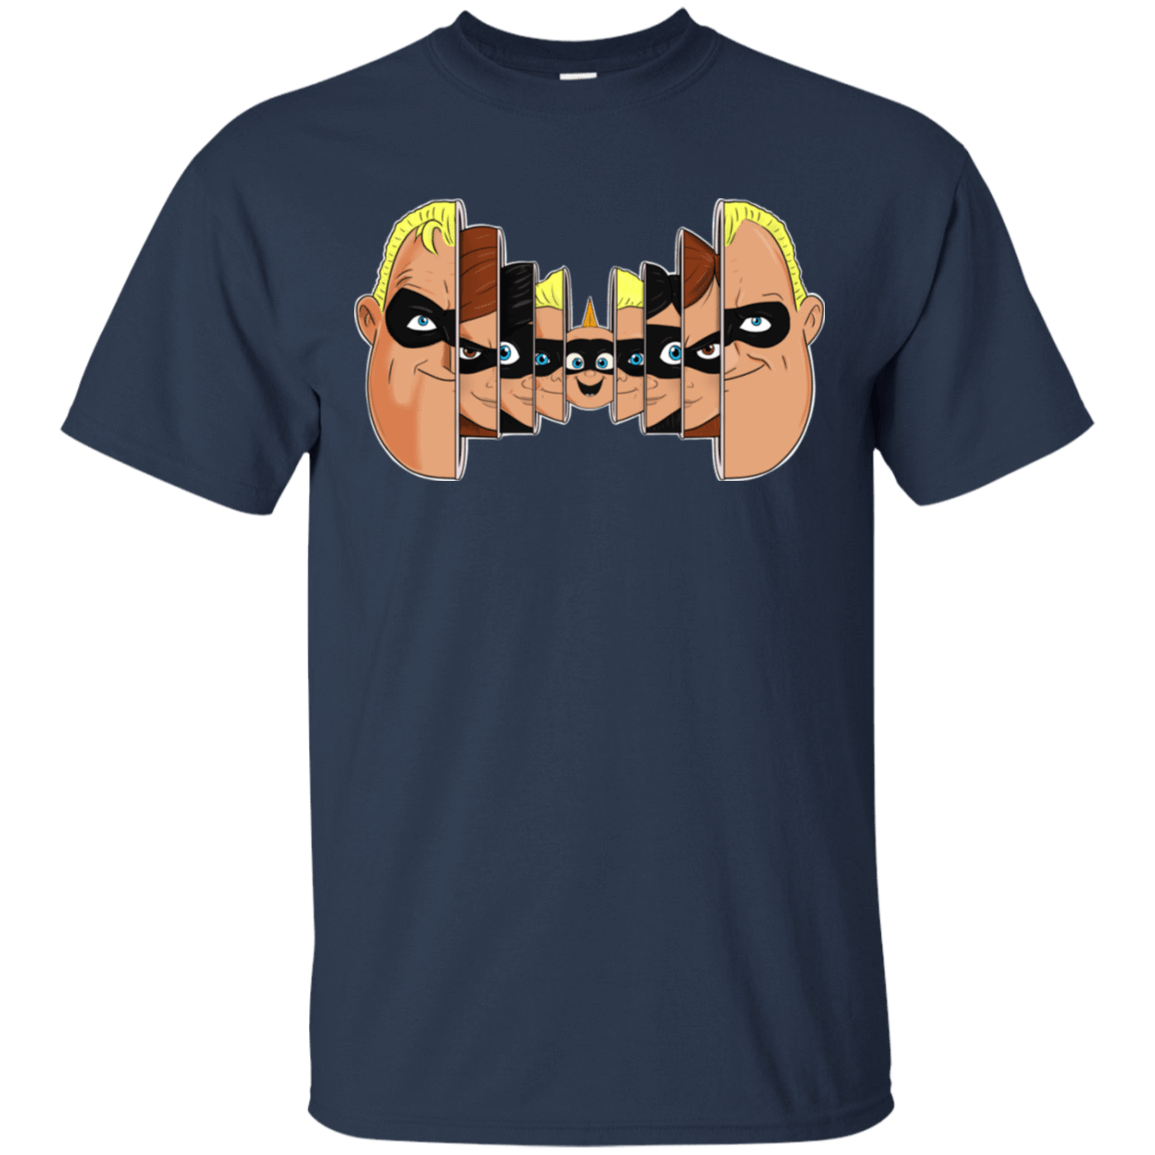 T-Shirts Navy / S Incredibles T-Shirt